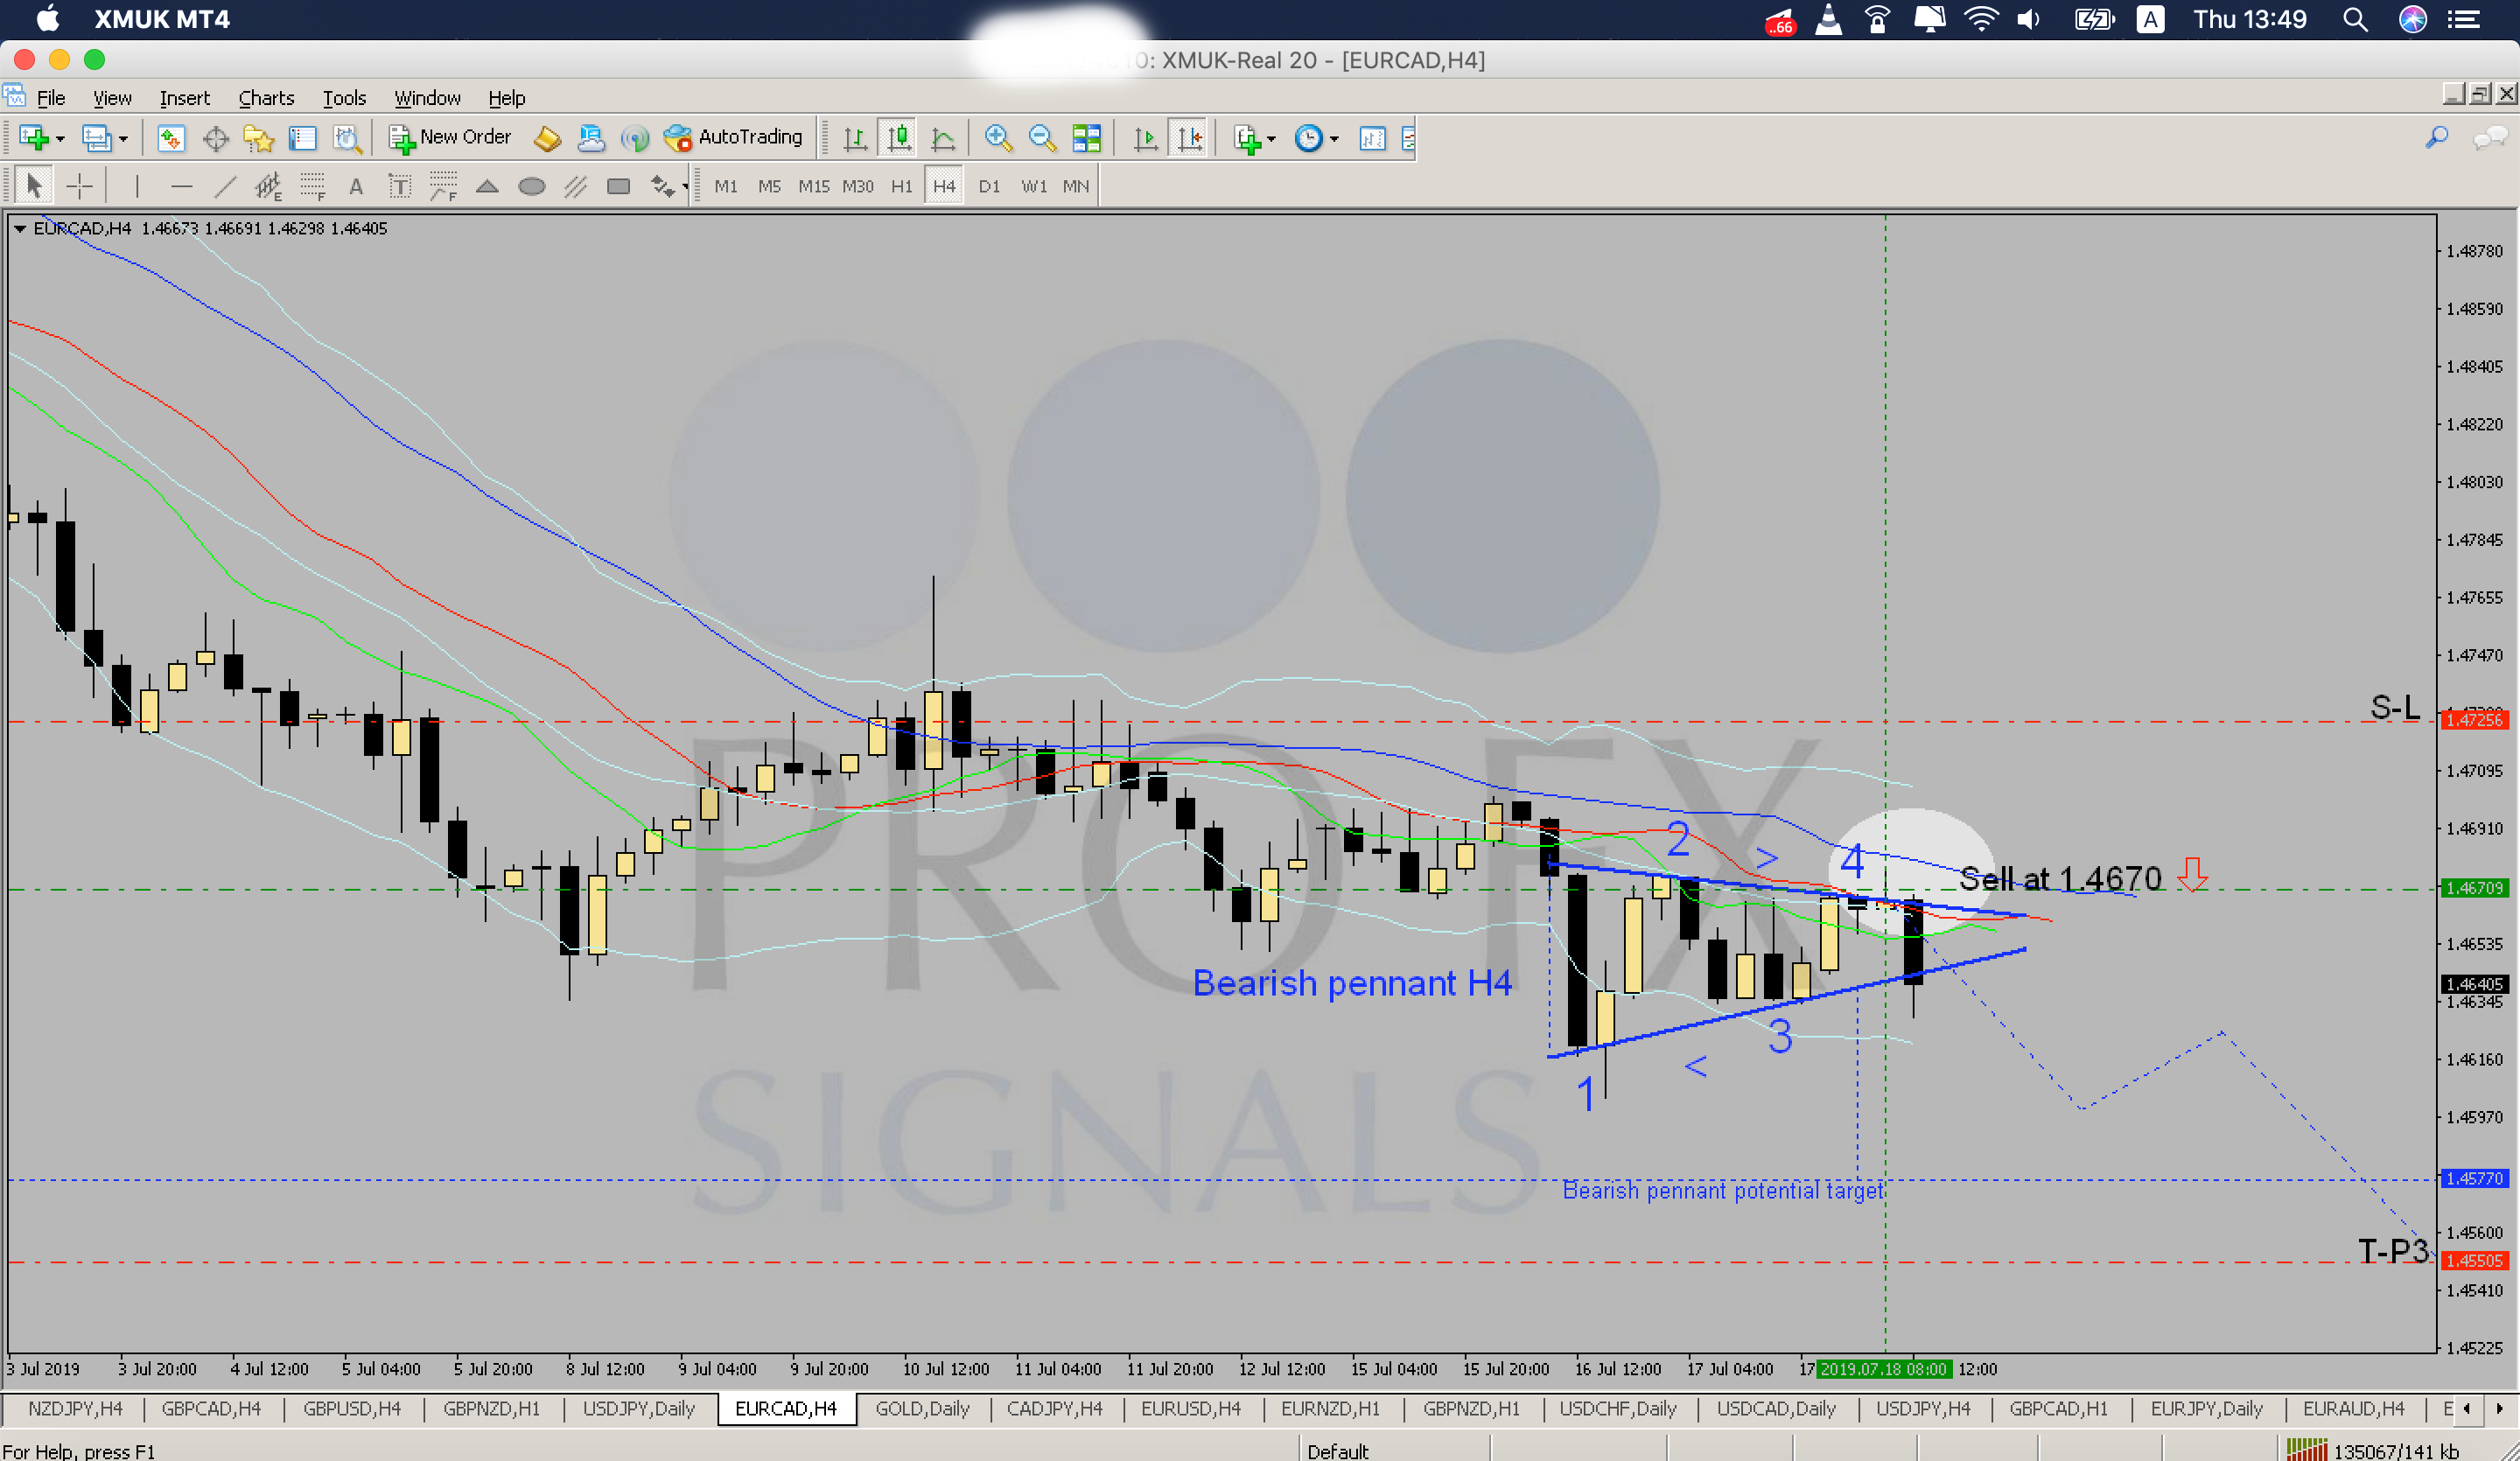 trading signals